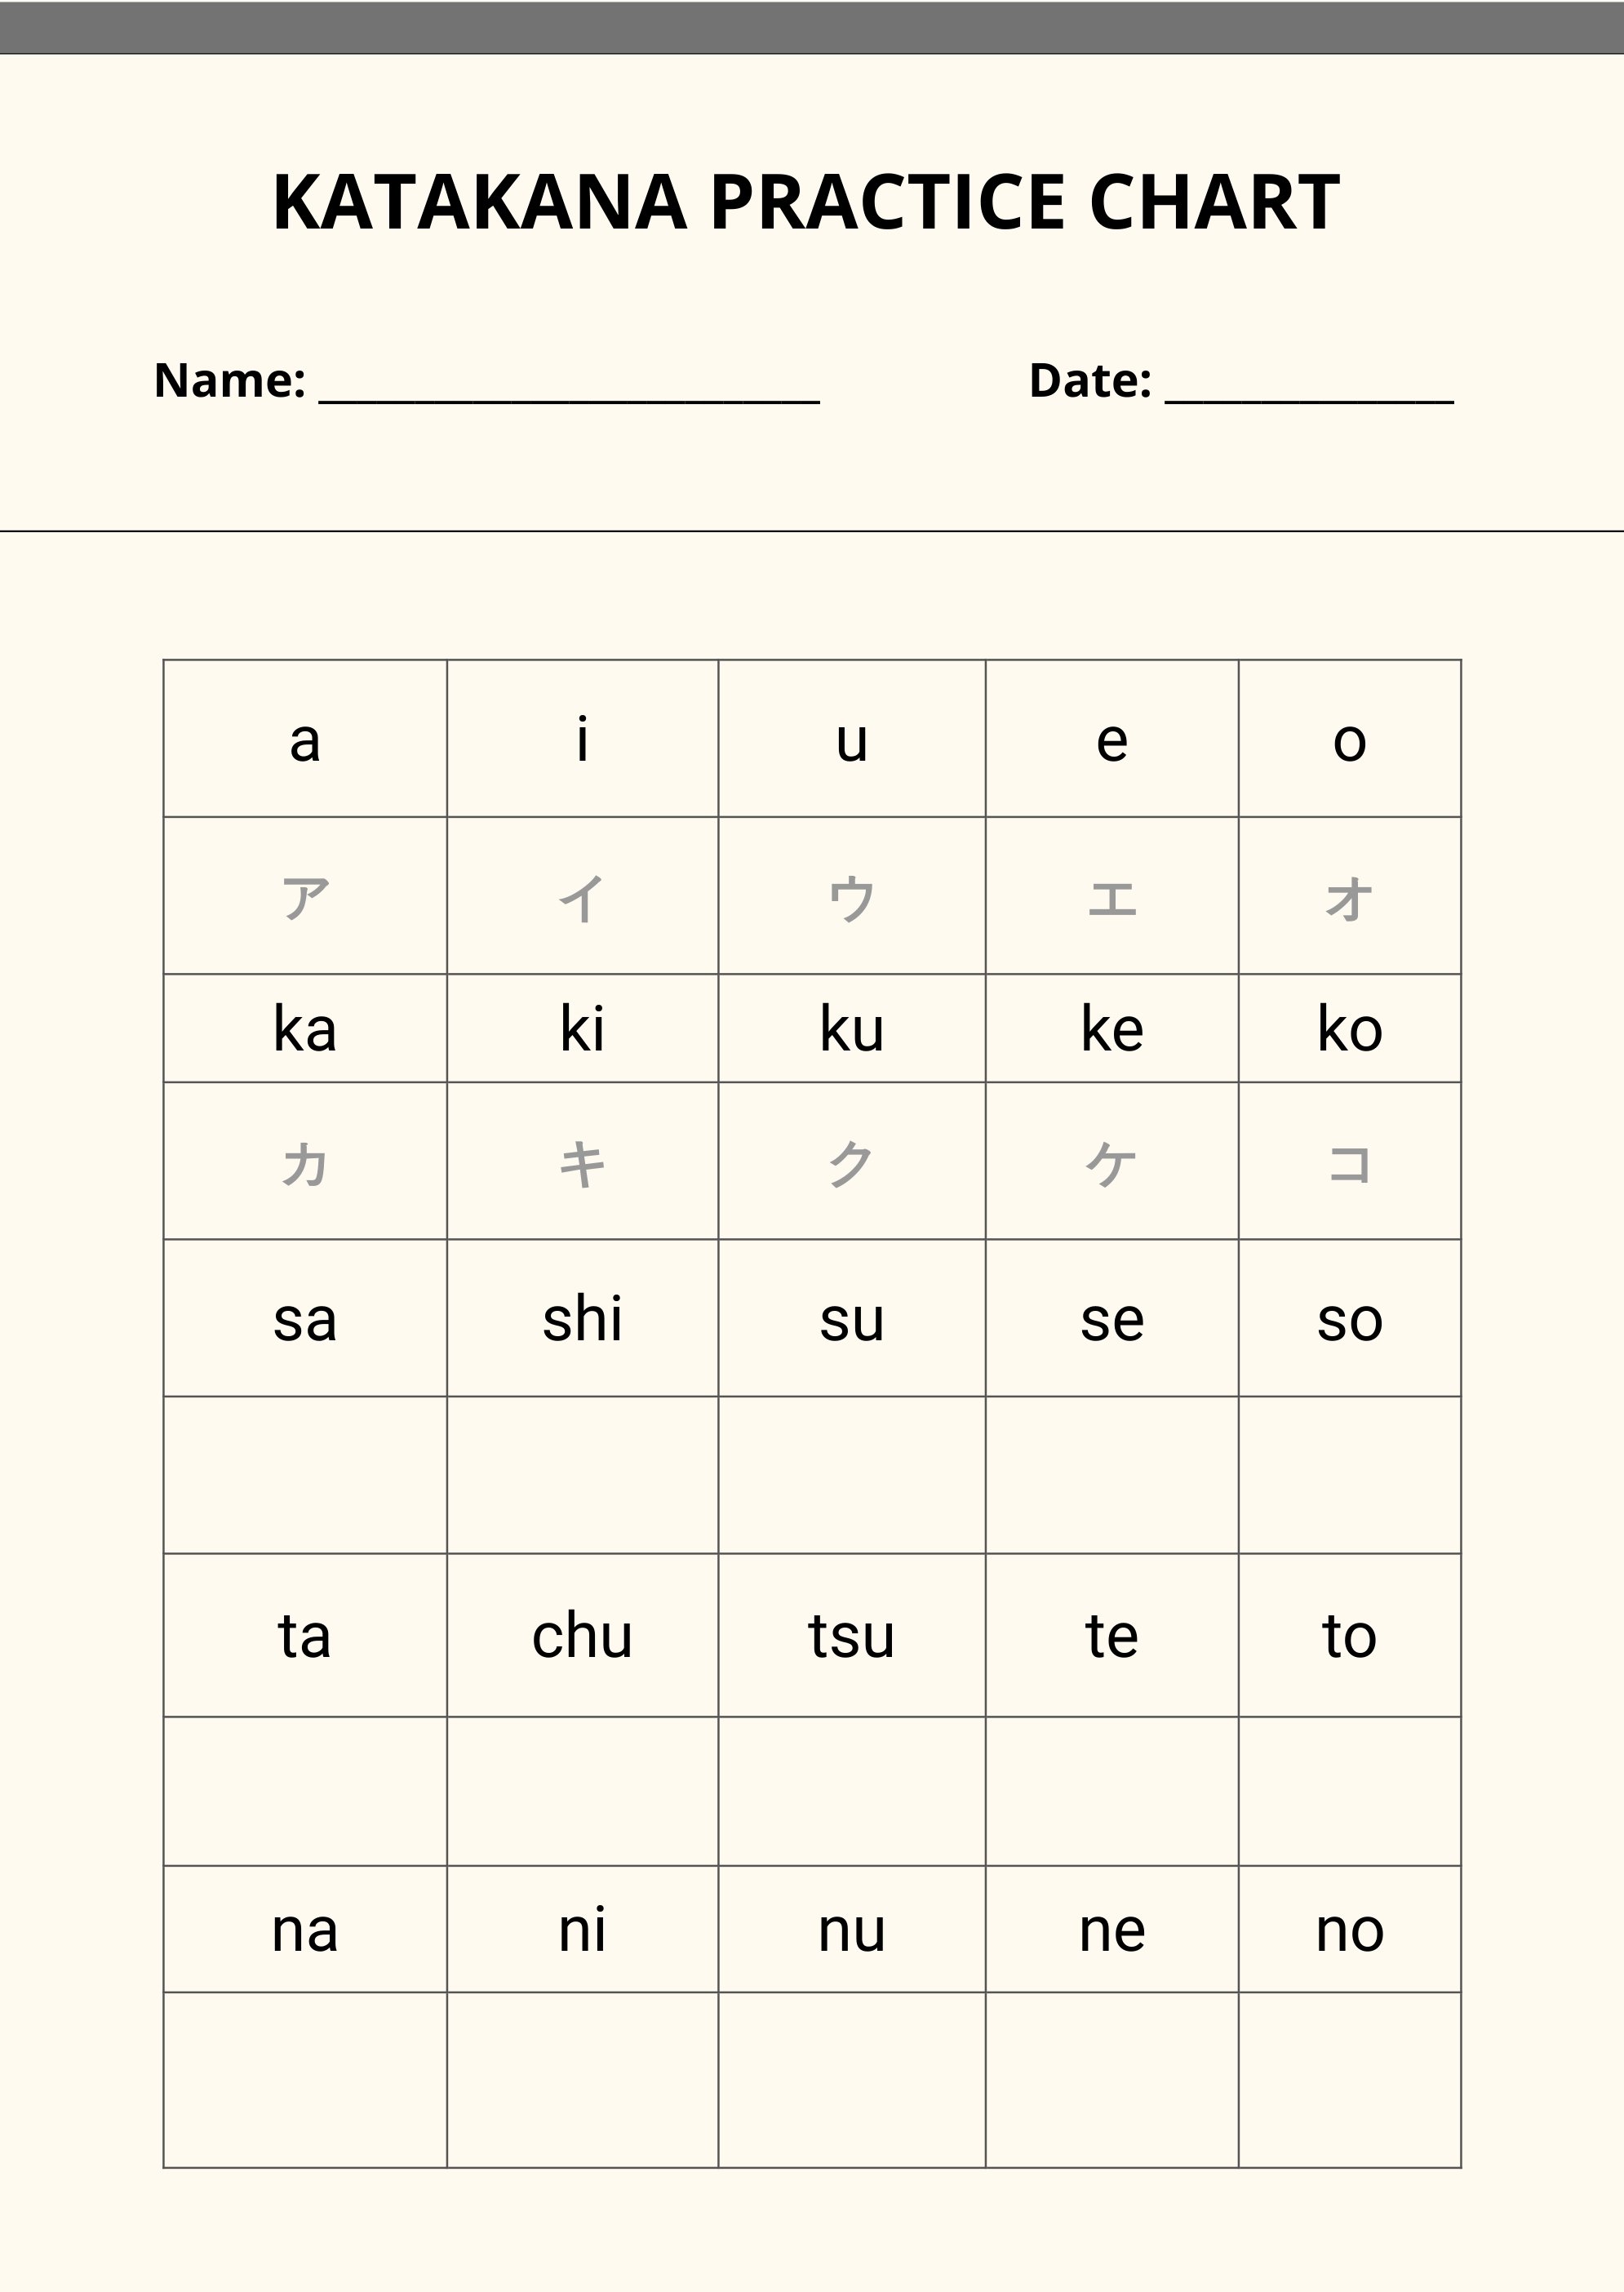 Free Katakana Practice Chart in PDF, Illustrator